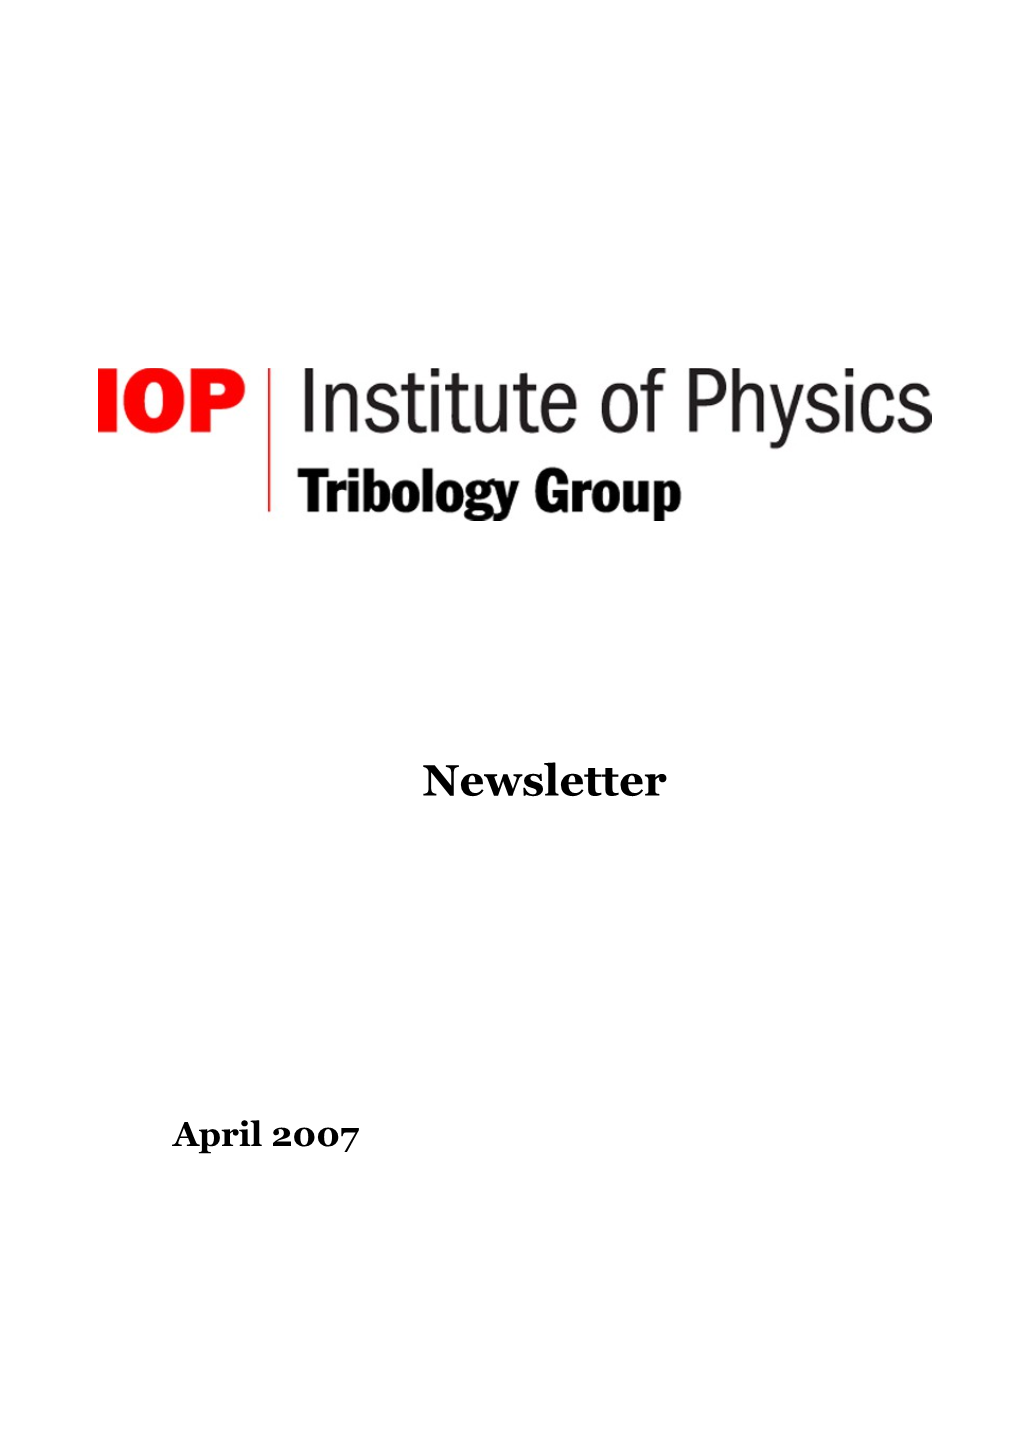 The Institute of Physics